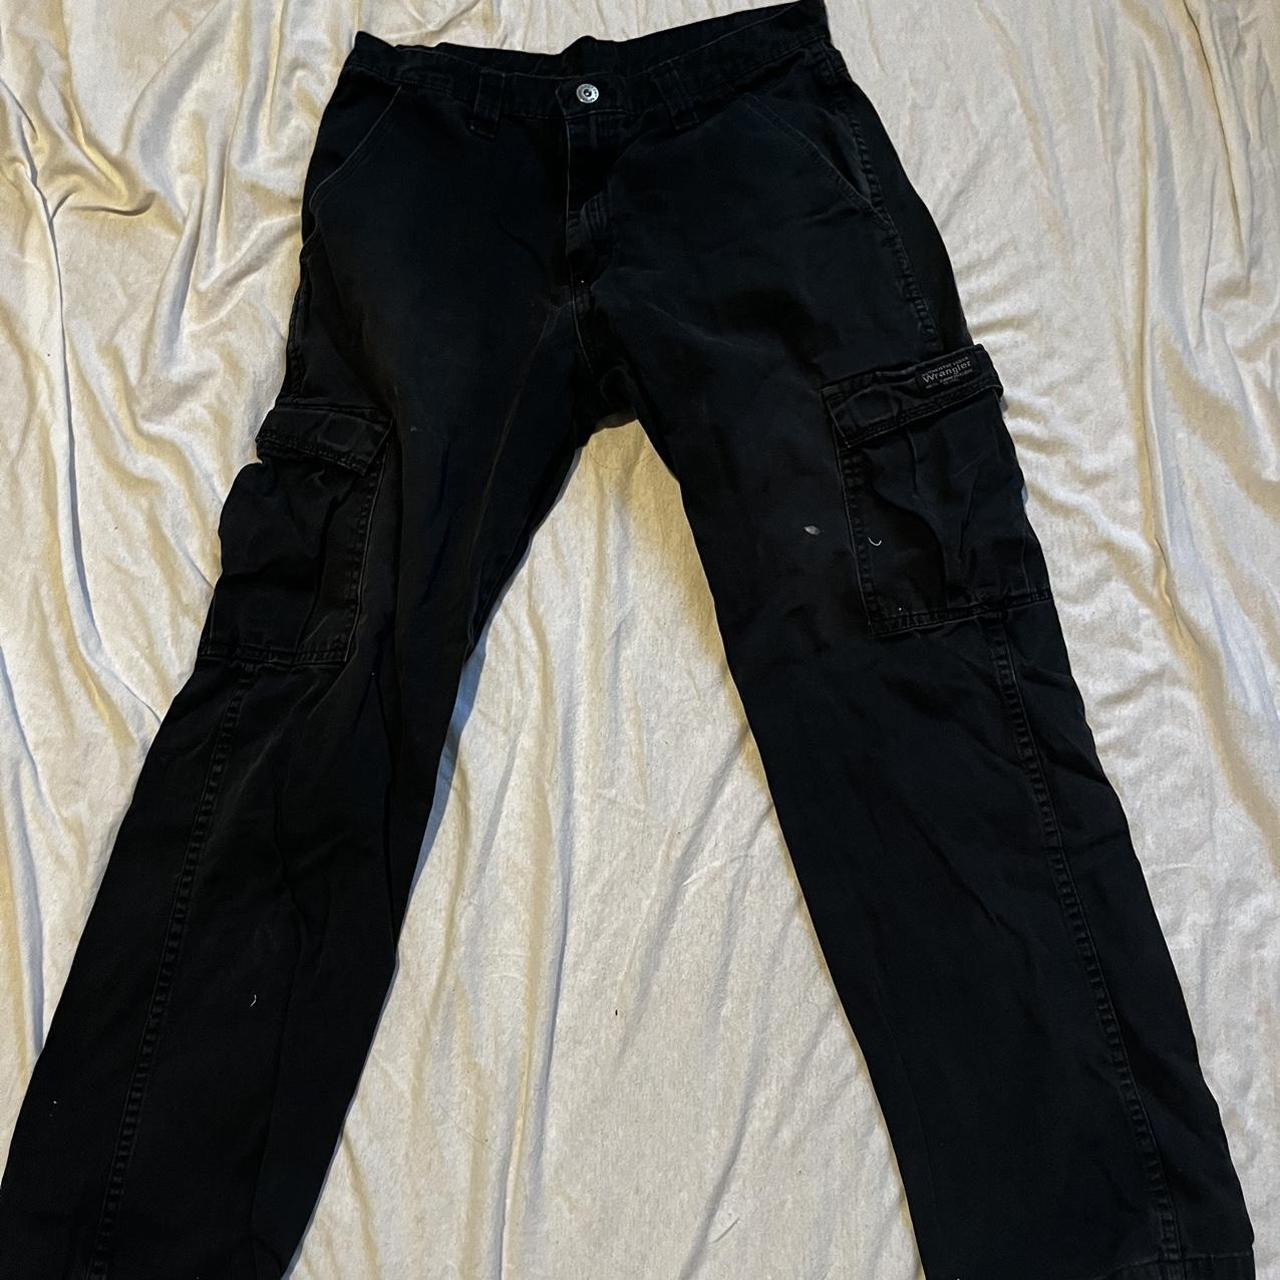 Vintage wrangler black cargo pants size 32/30. Small... - Depop